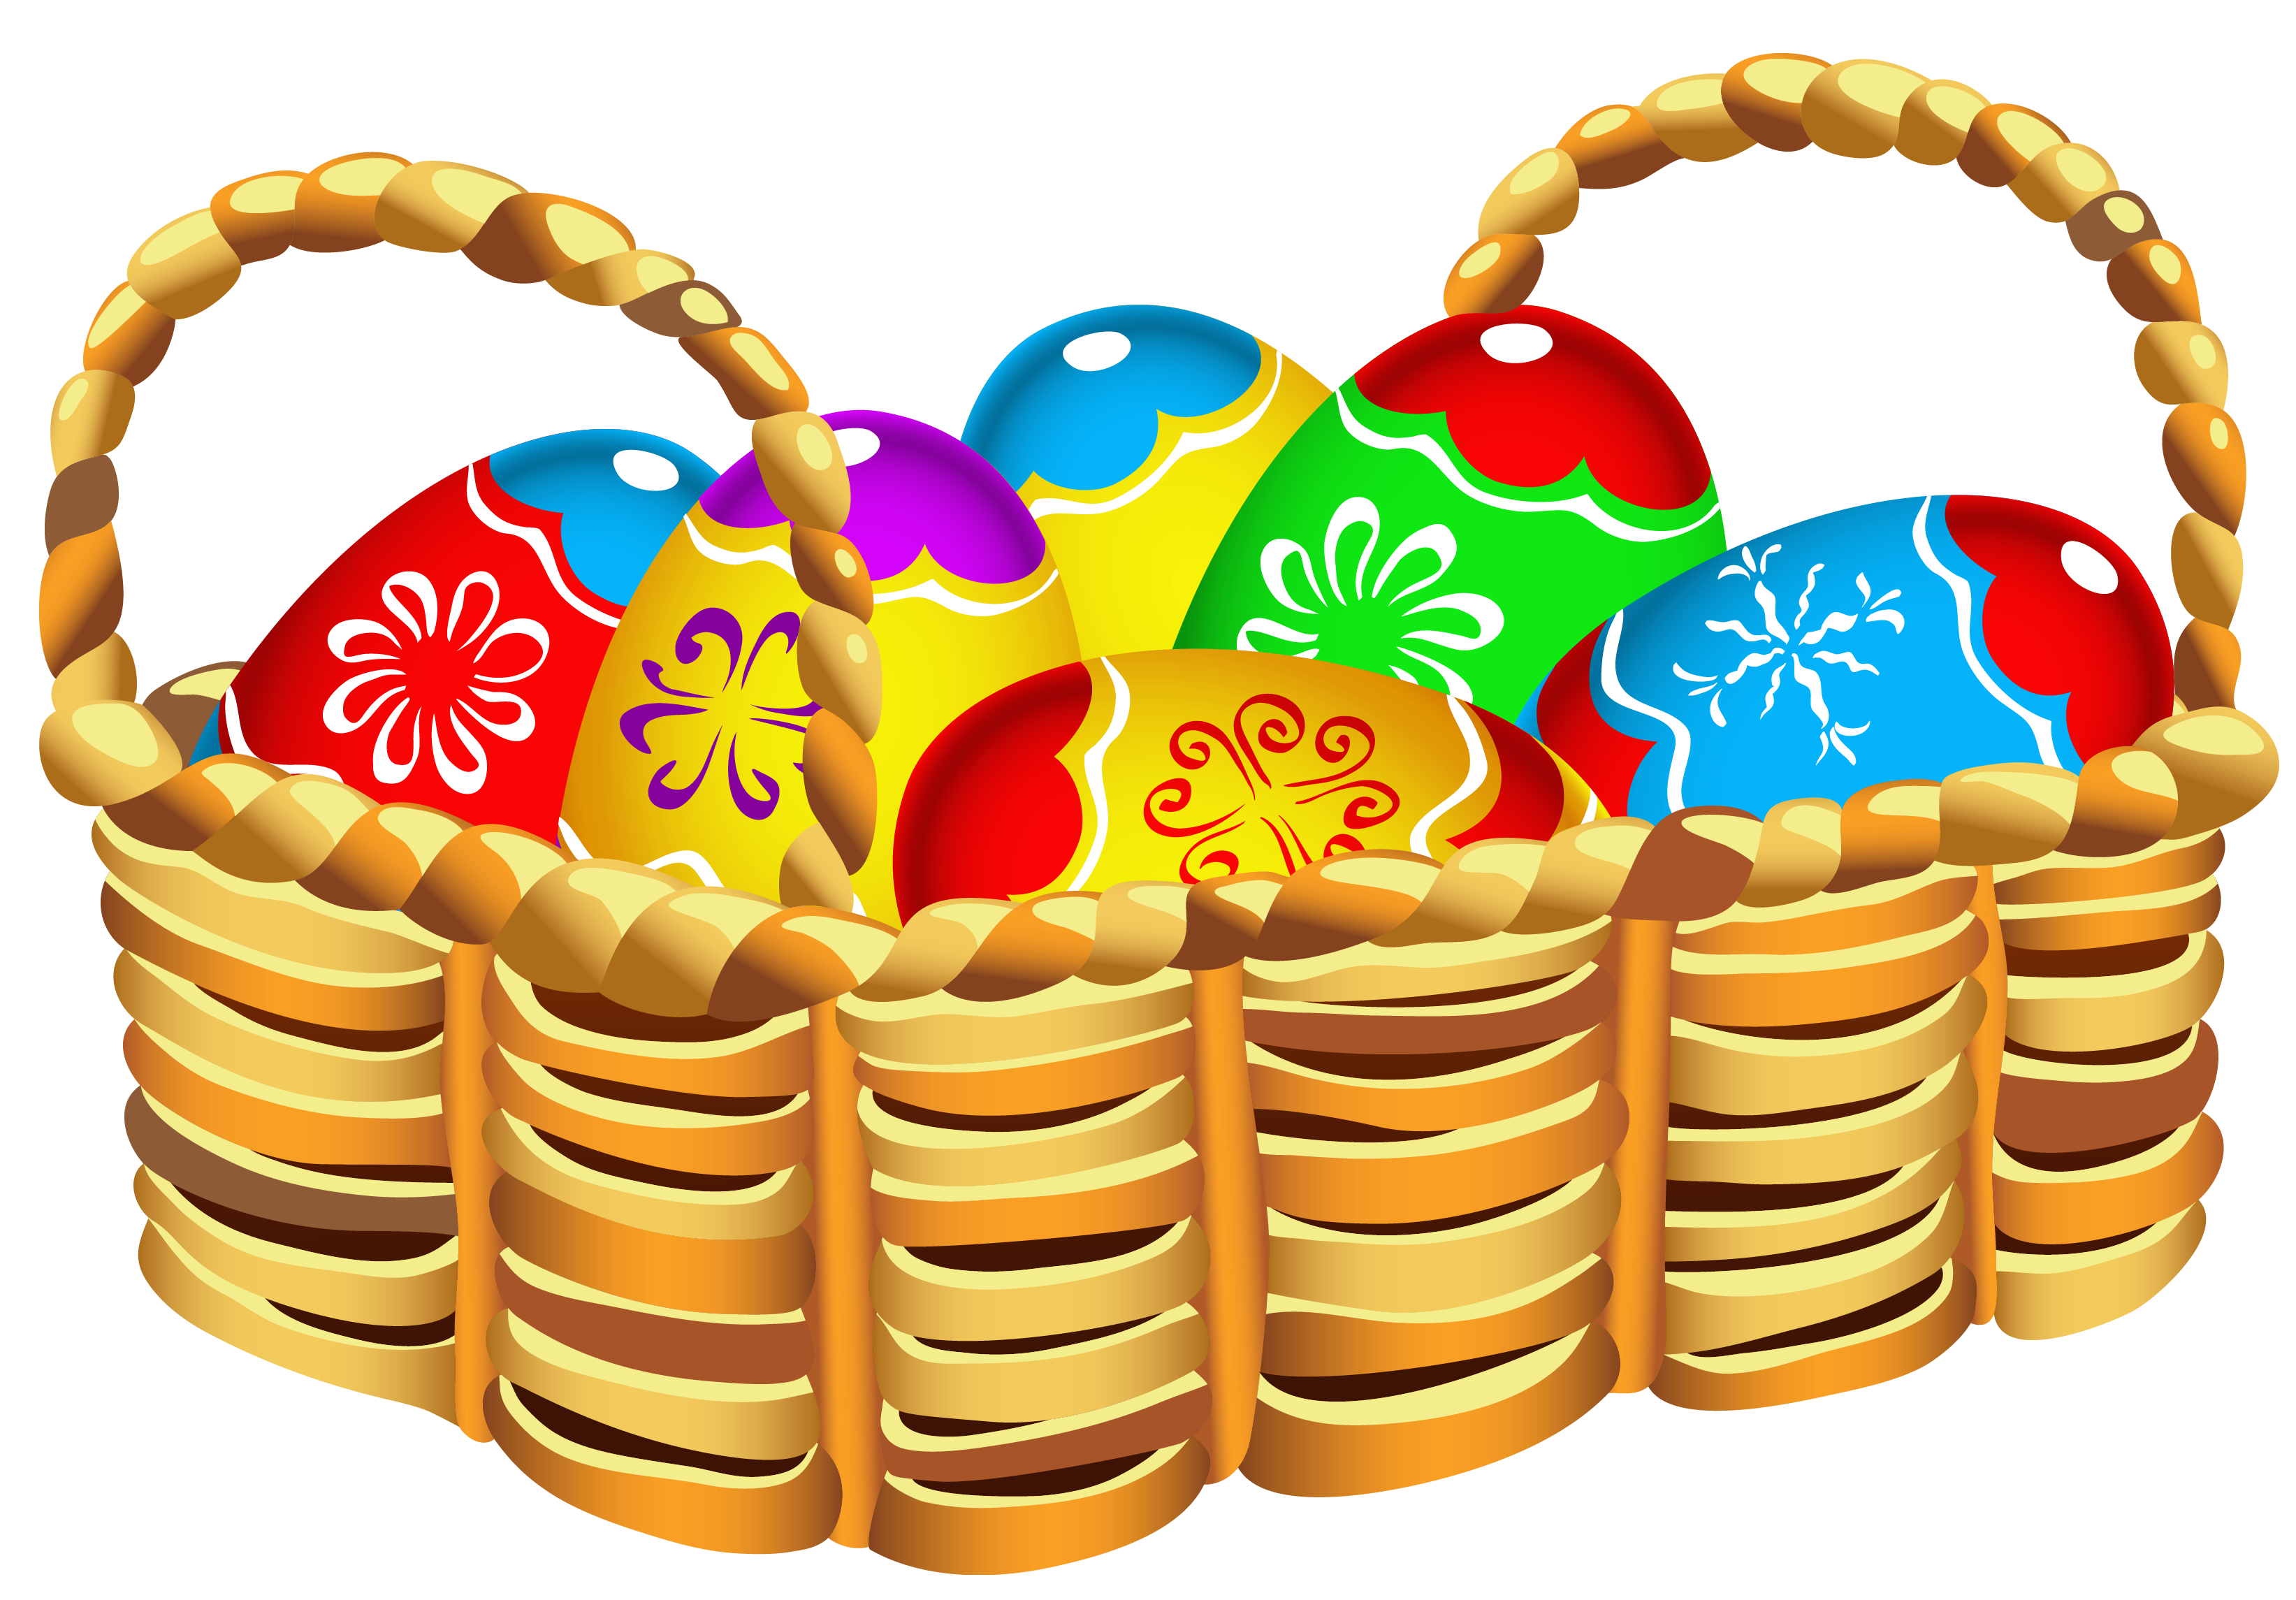 Easter Egg Baskets - ClipArt Best